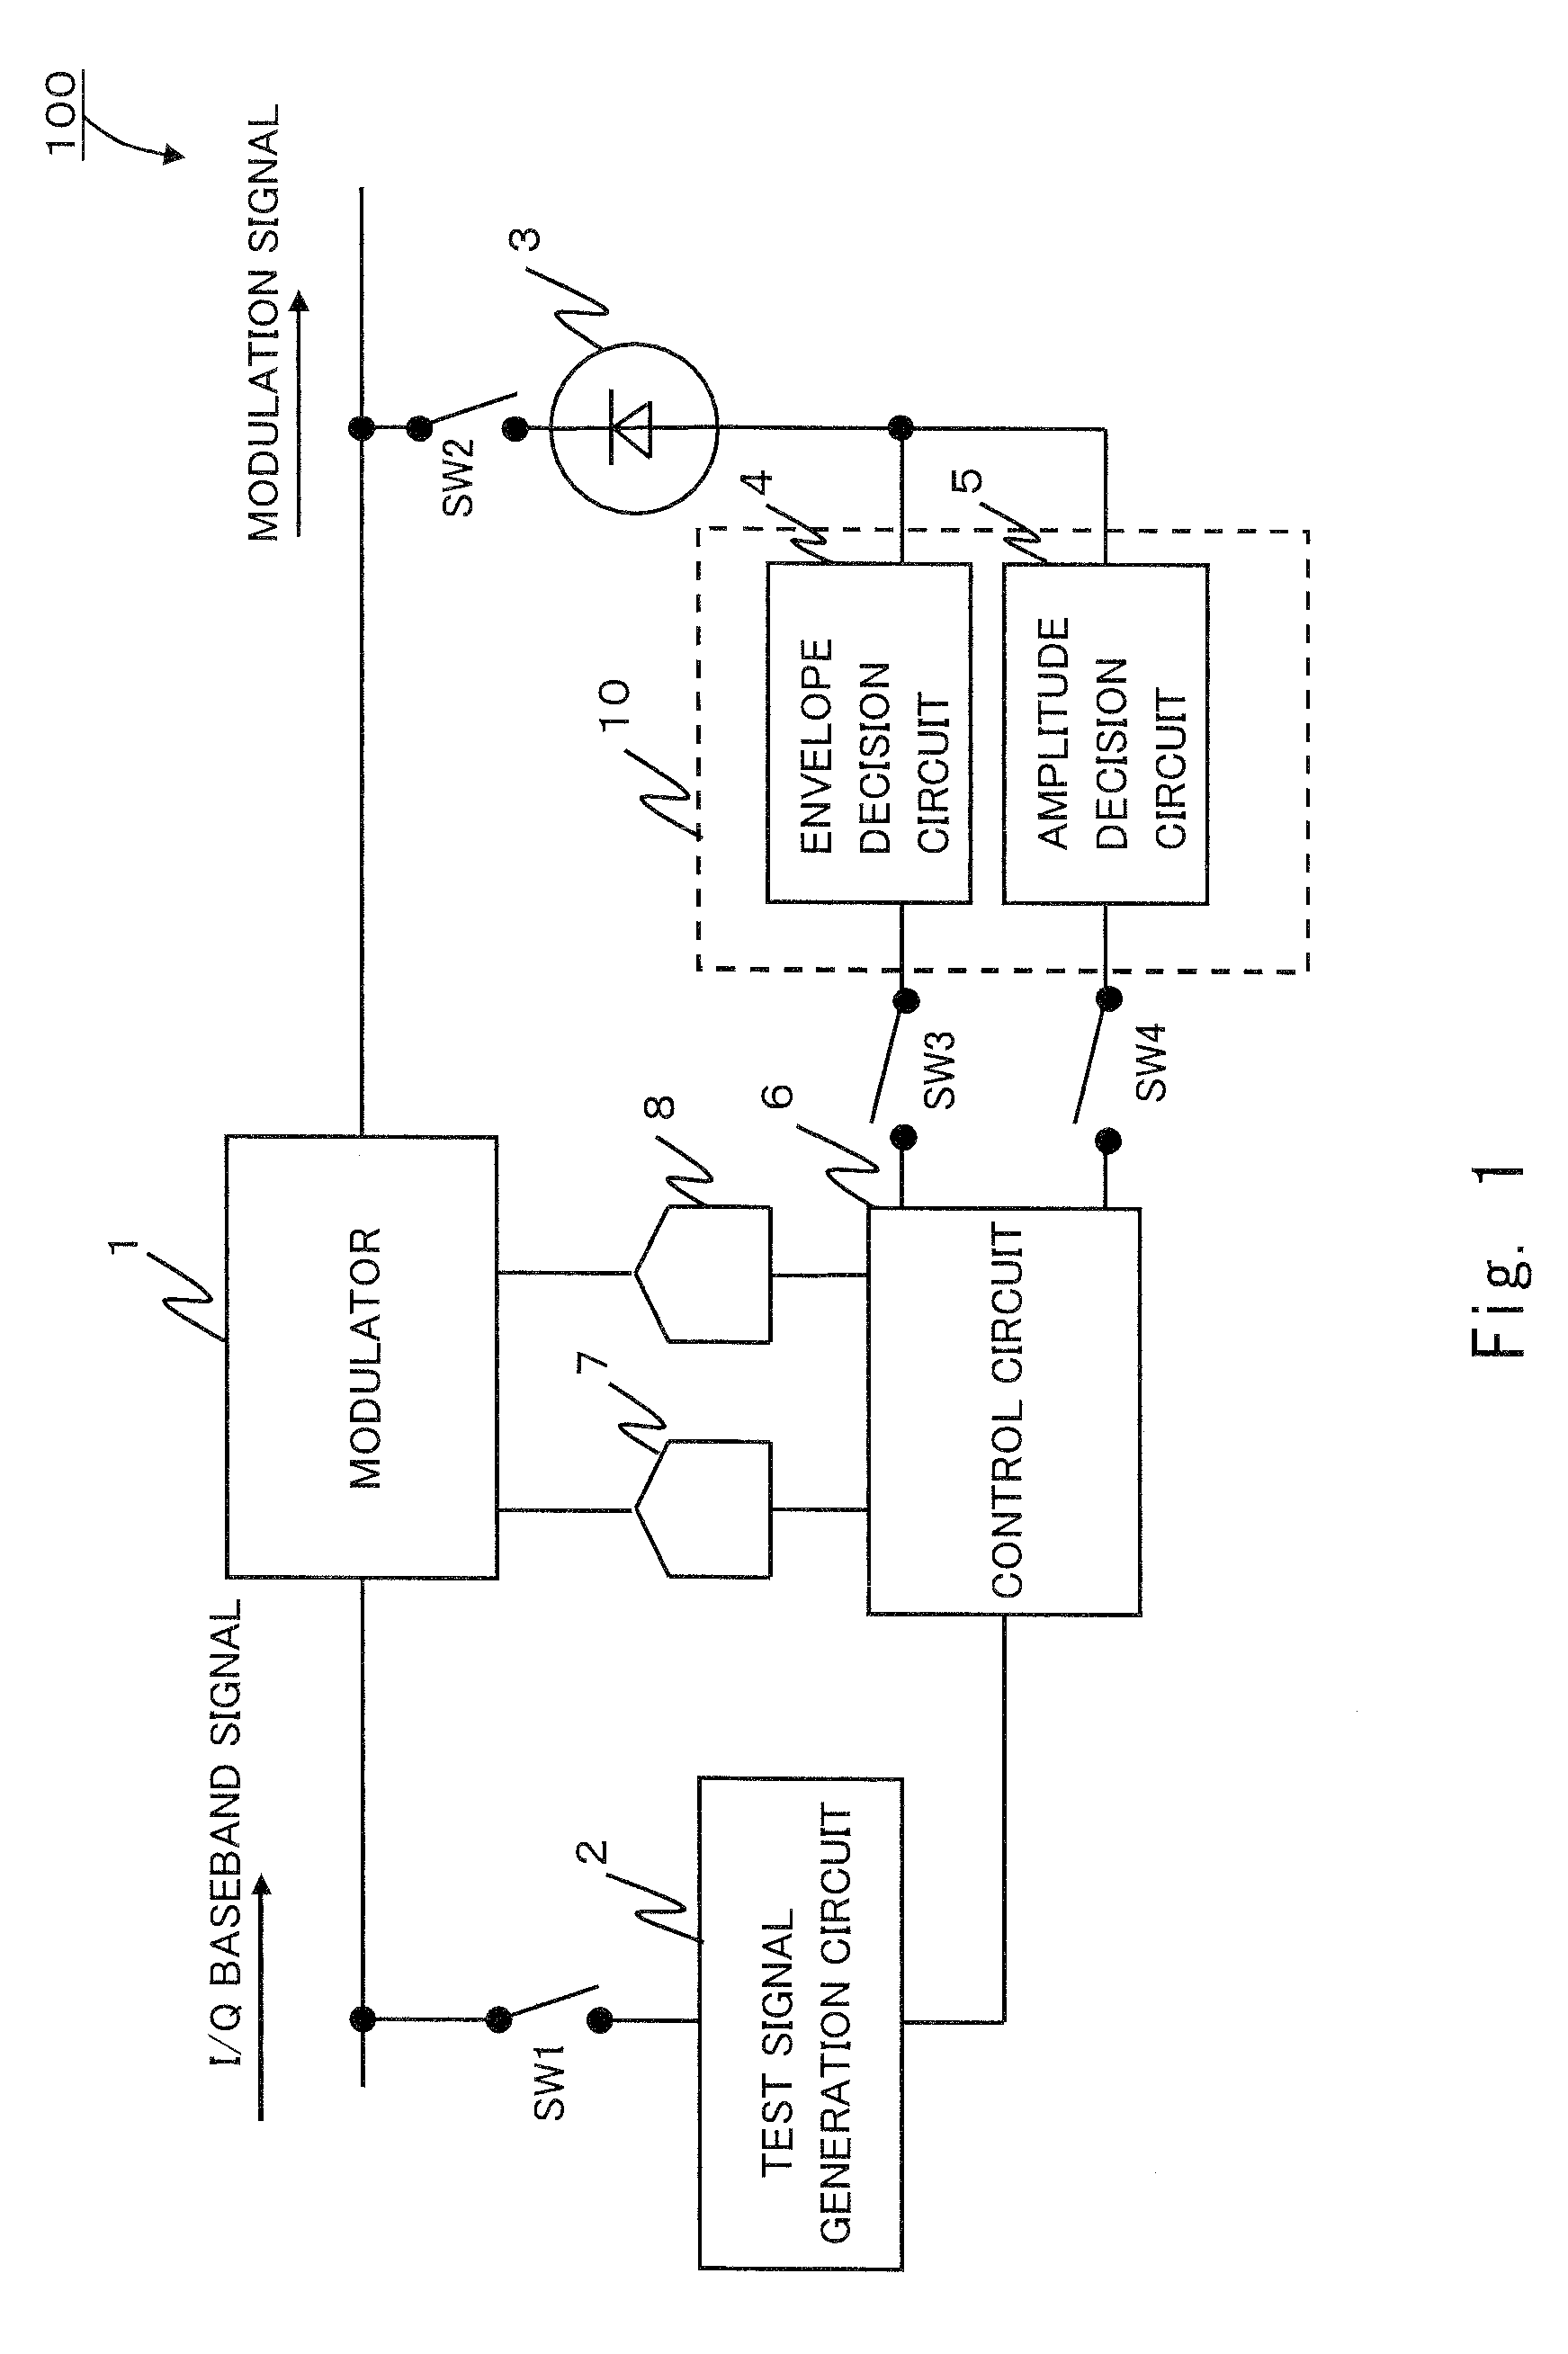 Modulation circuit having DC offset level control circuit